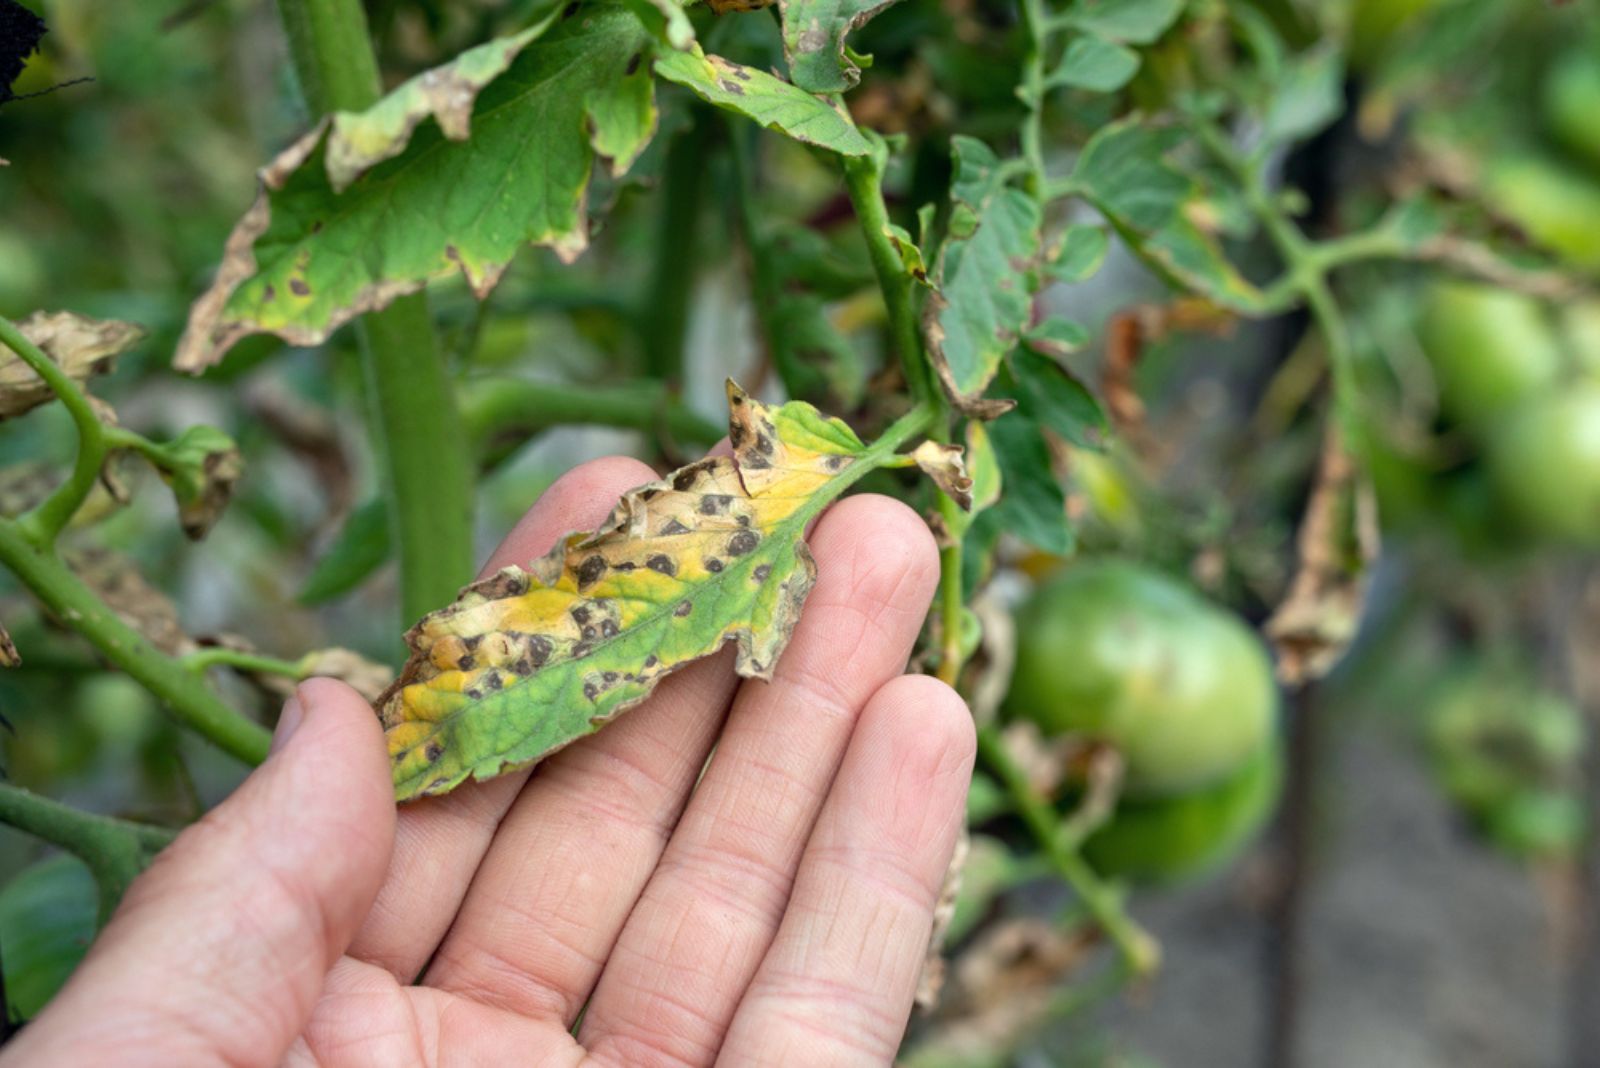 Septoria leaf spot on tomato